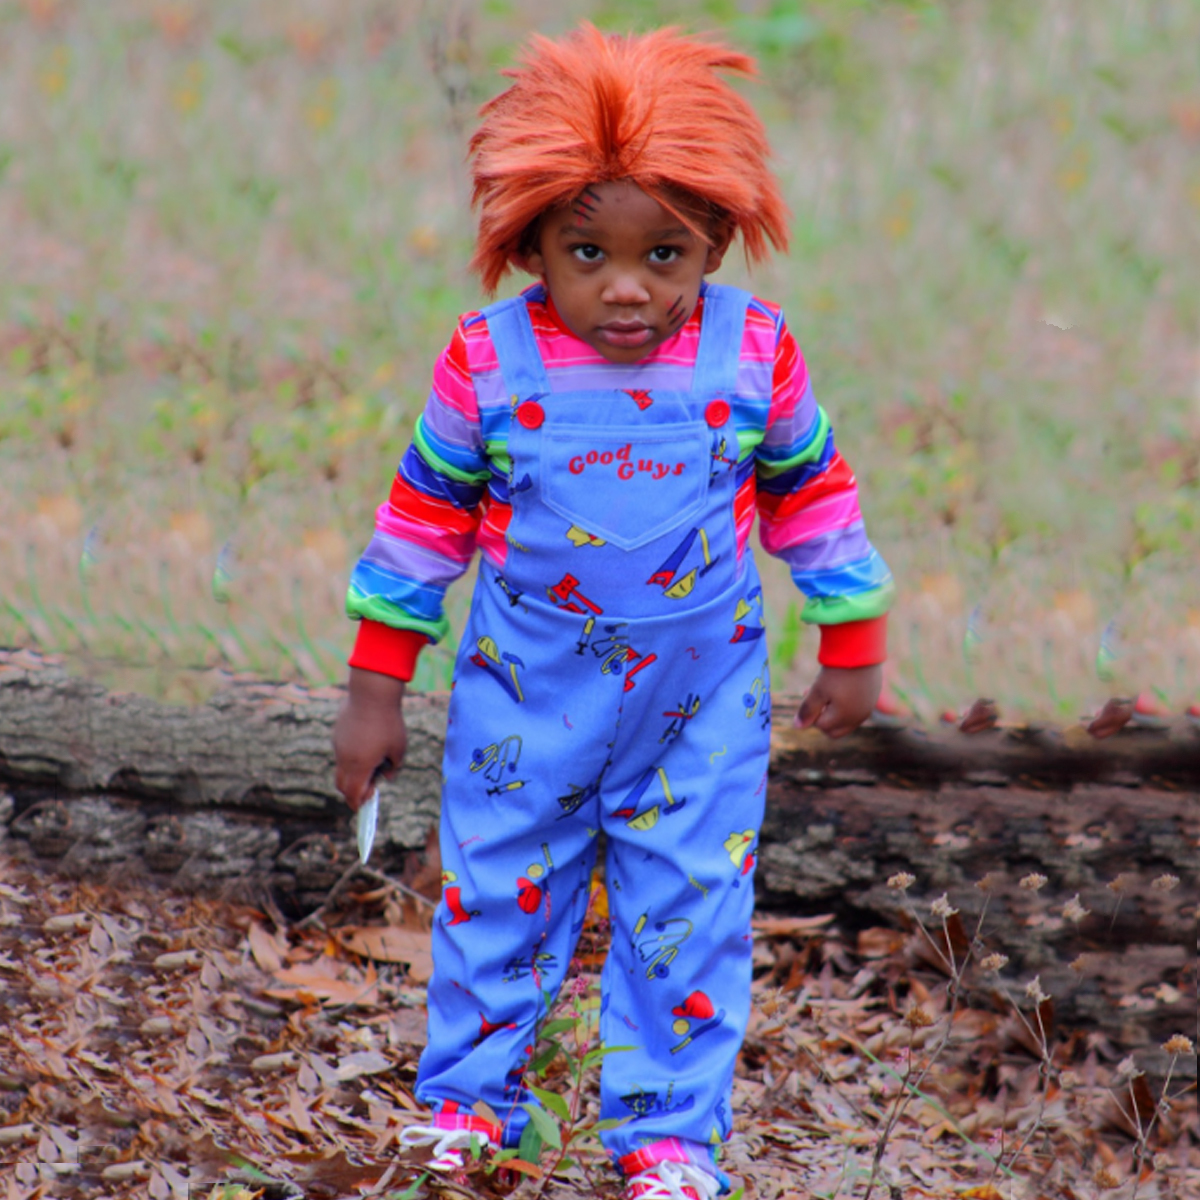 comentarista alegría Profesor Buy Kids Chucky Costume l Chucky Halloween Costume for Kids